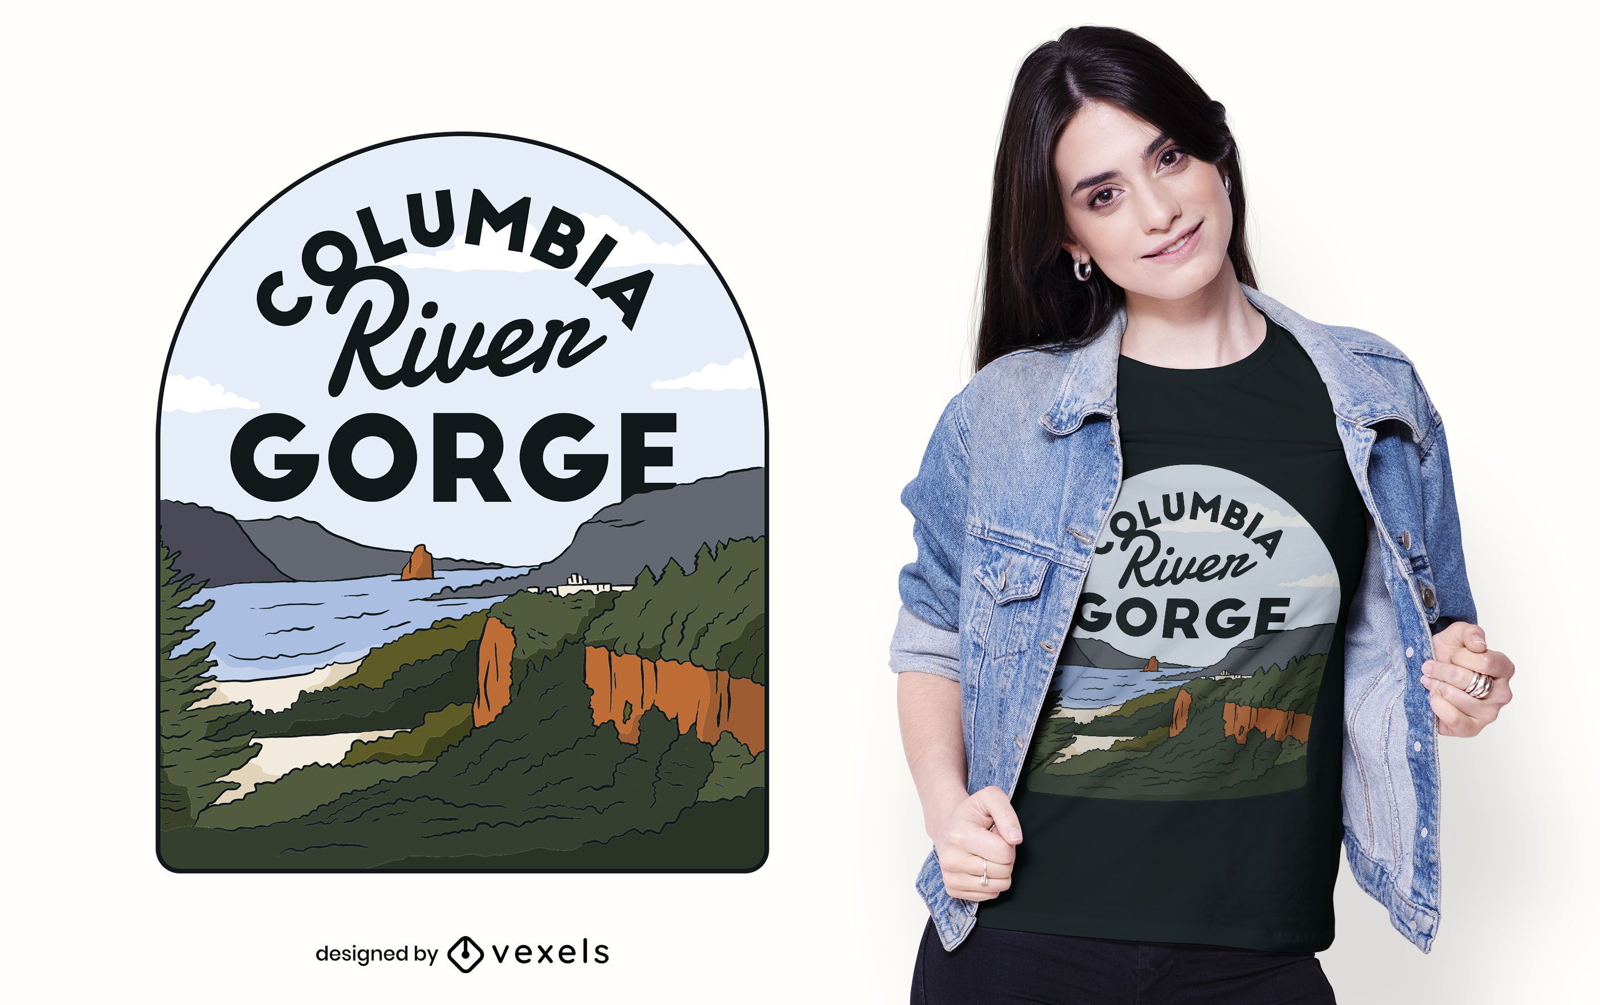 Dise?o de camiseta Columbia River Gorge